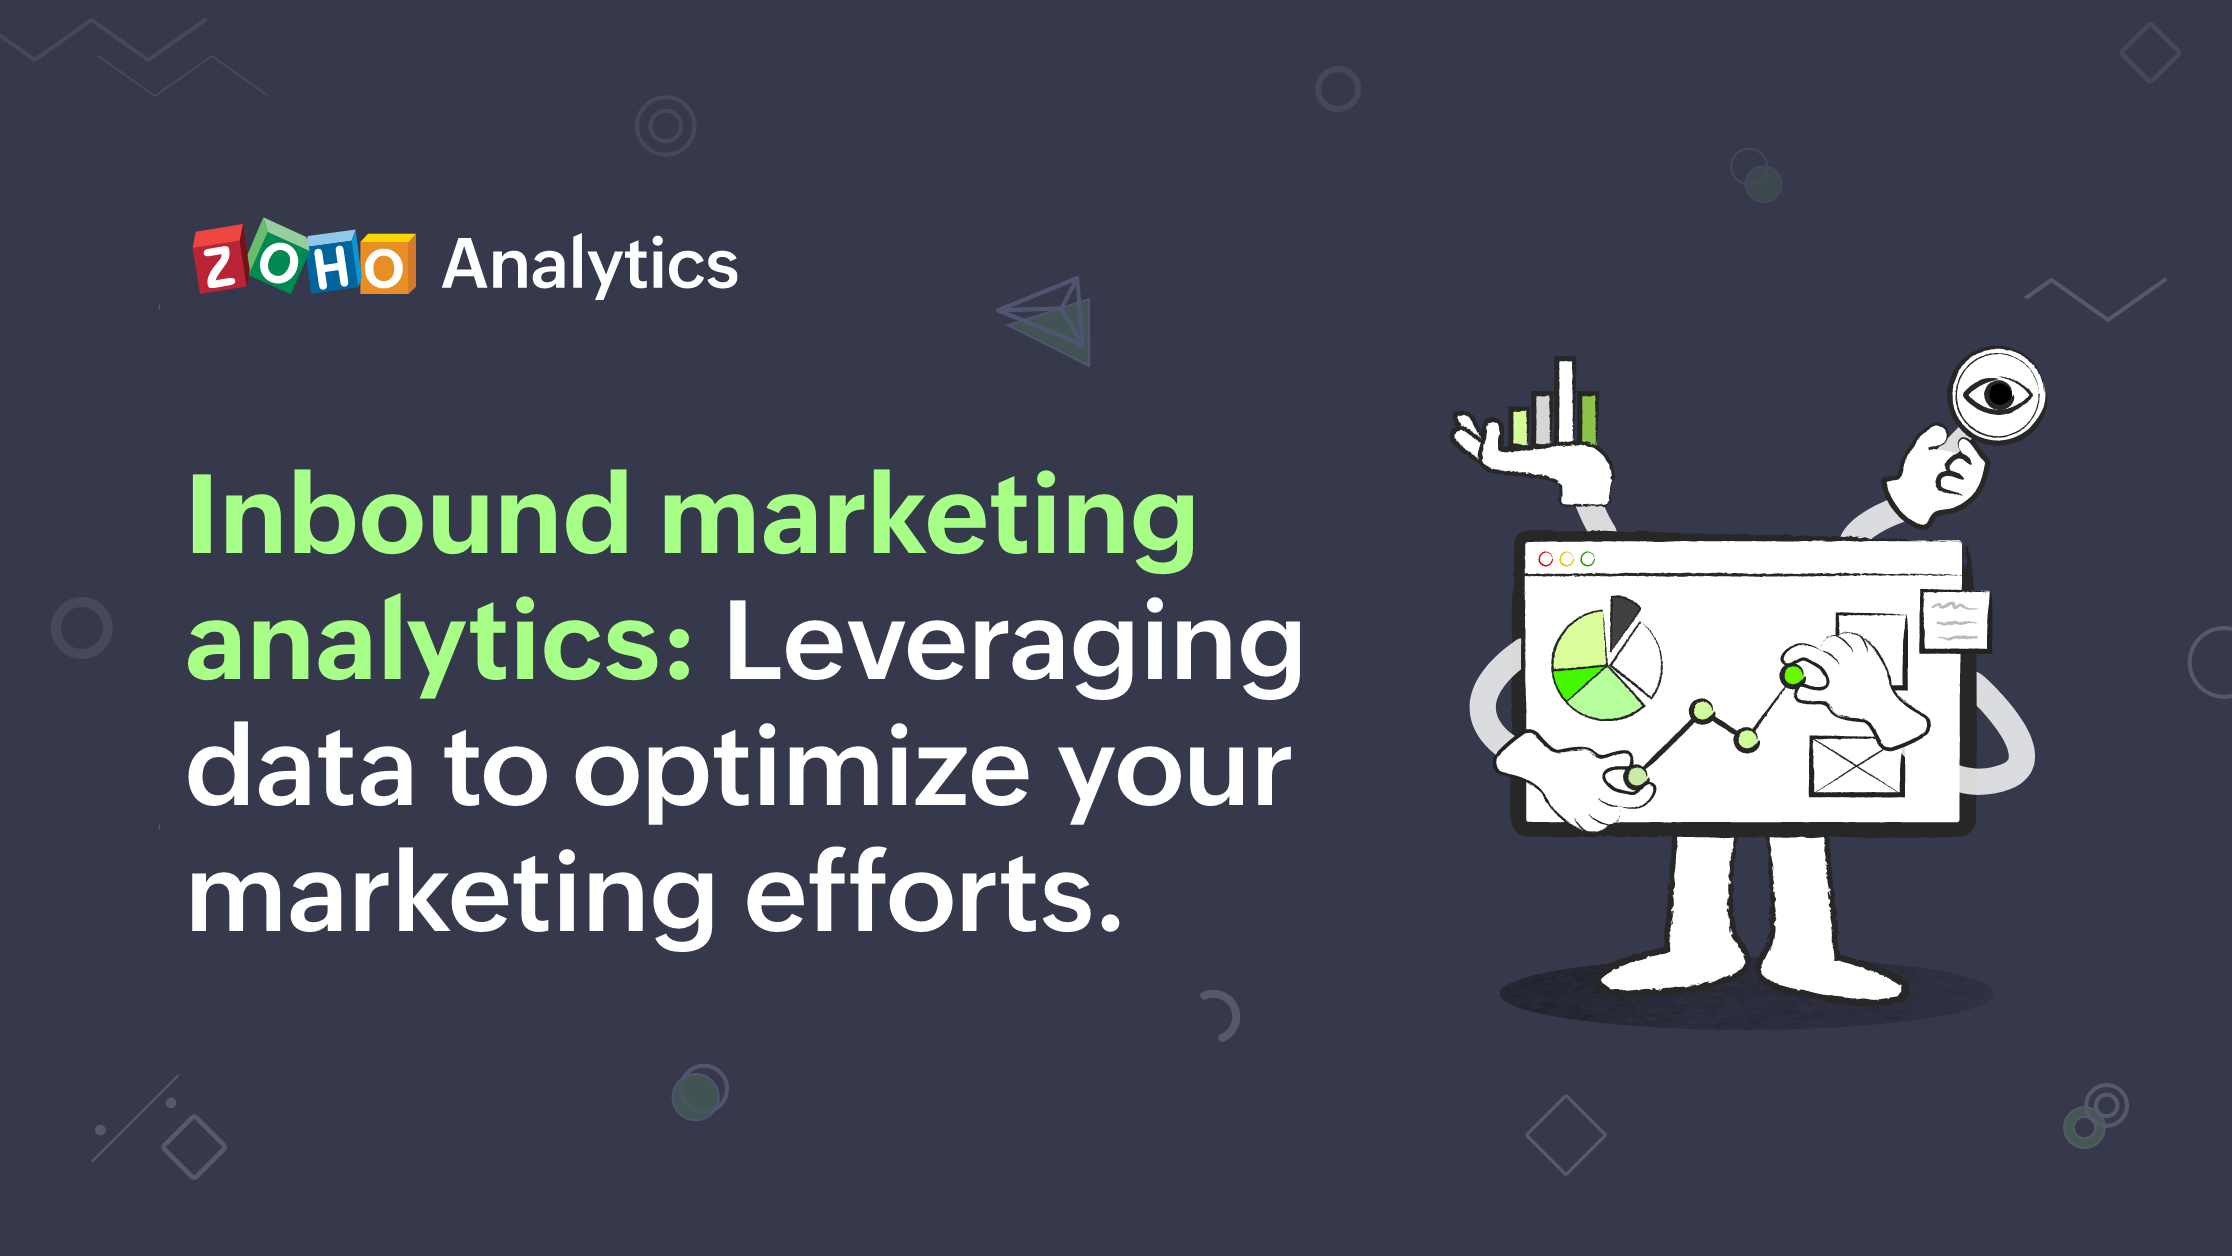 Inbound marketing analytics: Leveraging data to optimize your marketing efforts